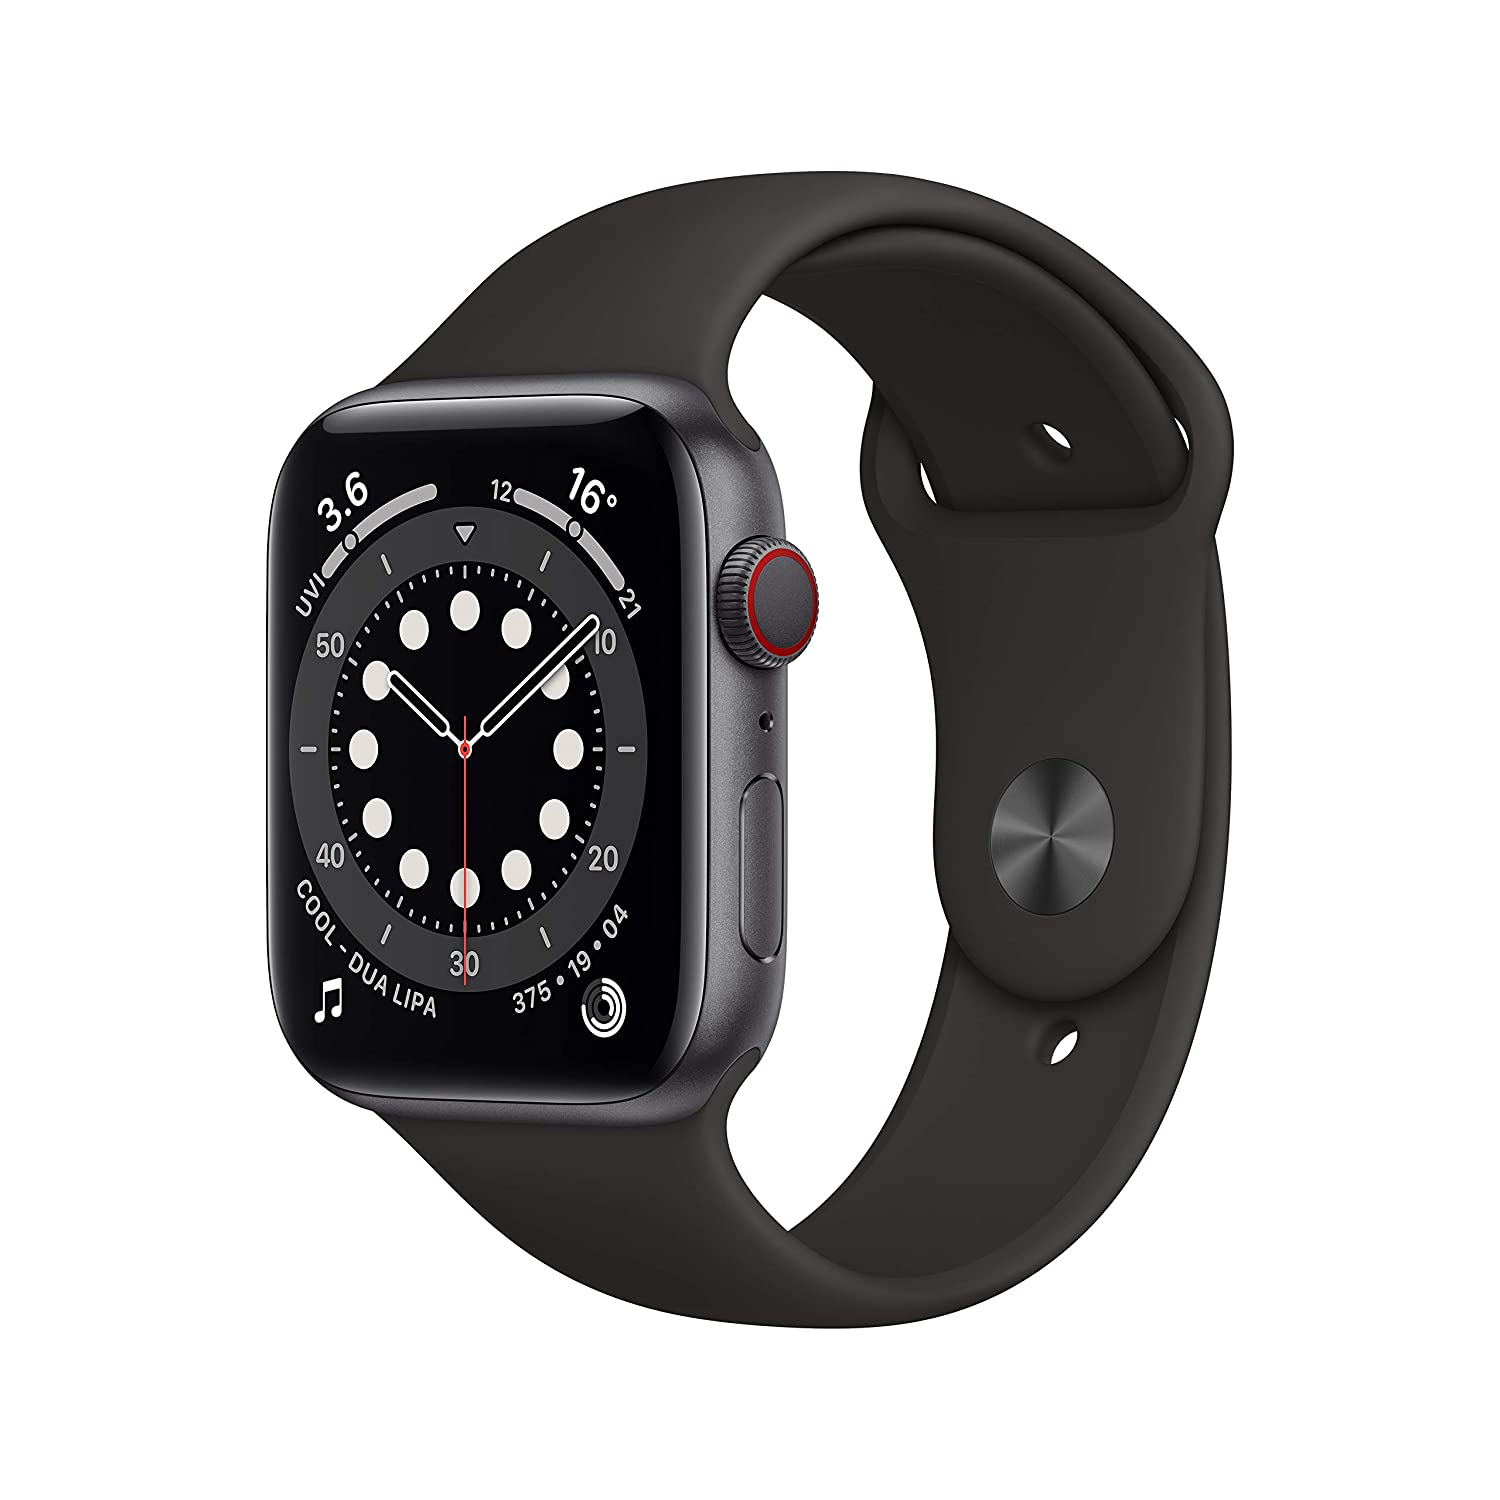 New Apple Watch Series 6 (GPS + Cellular, 44mm) -1